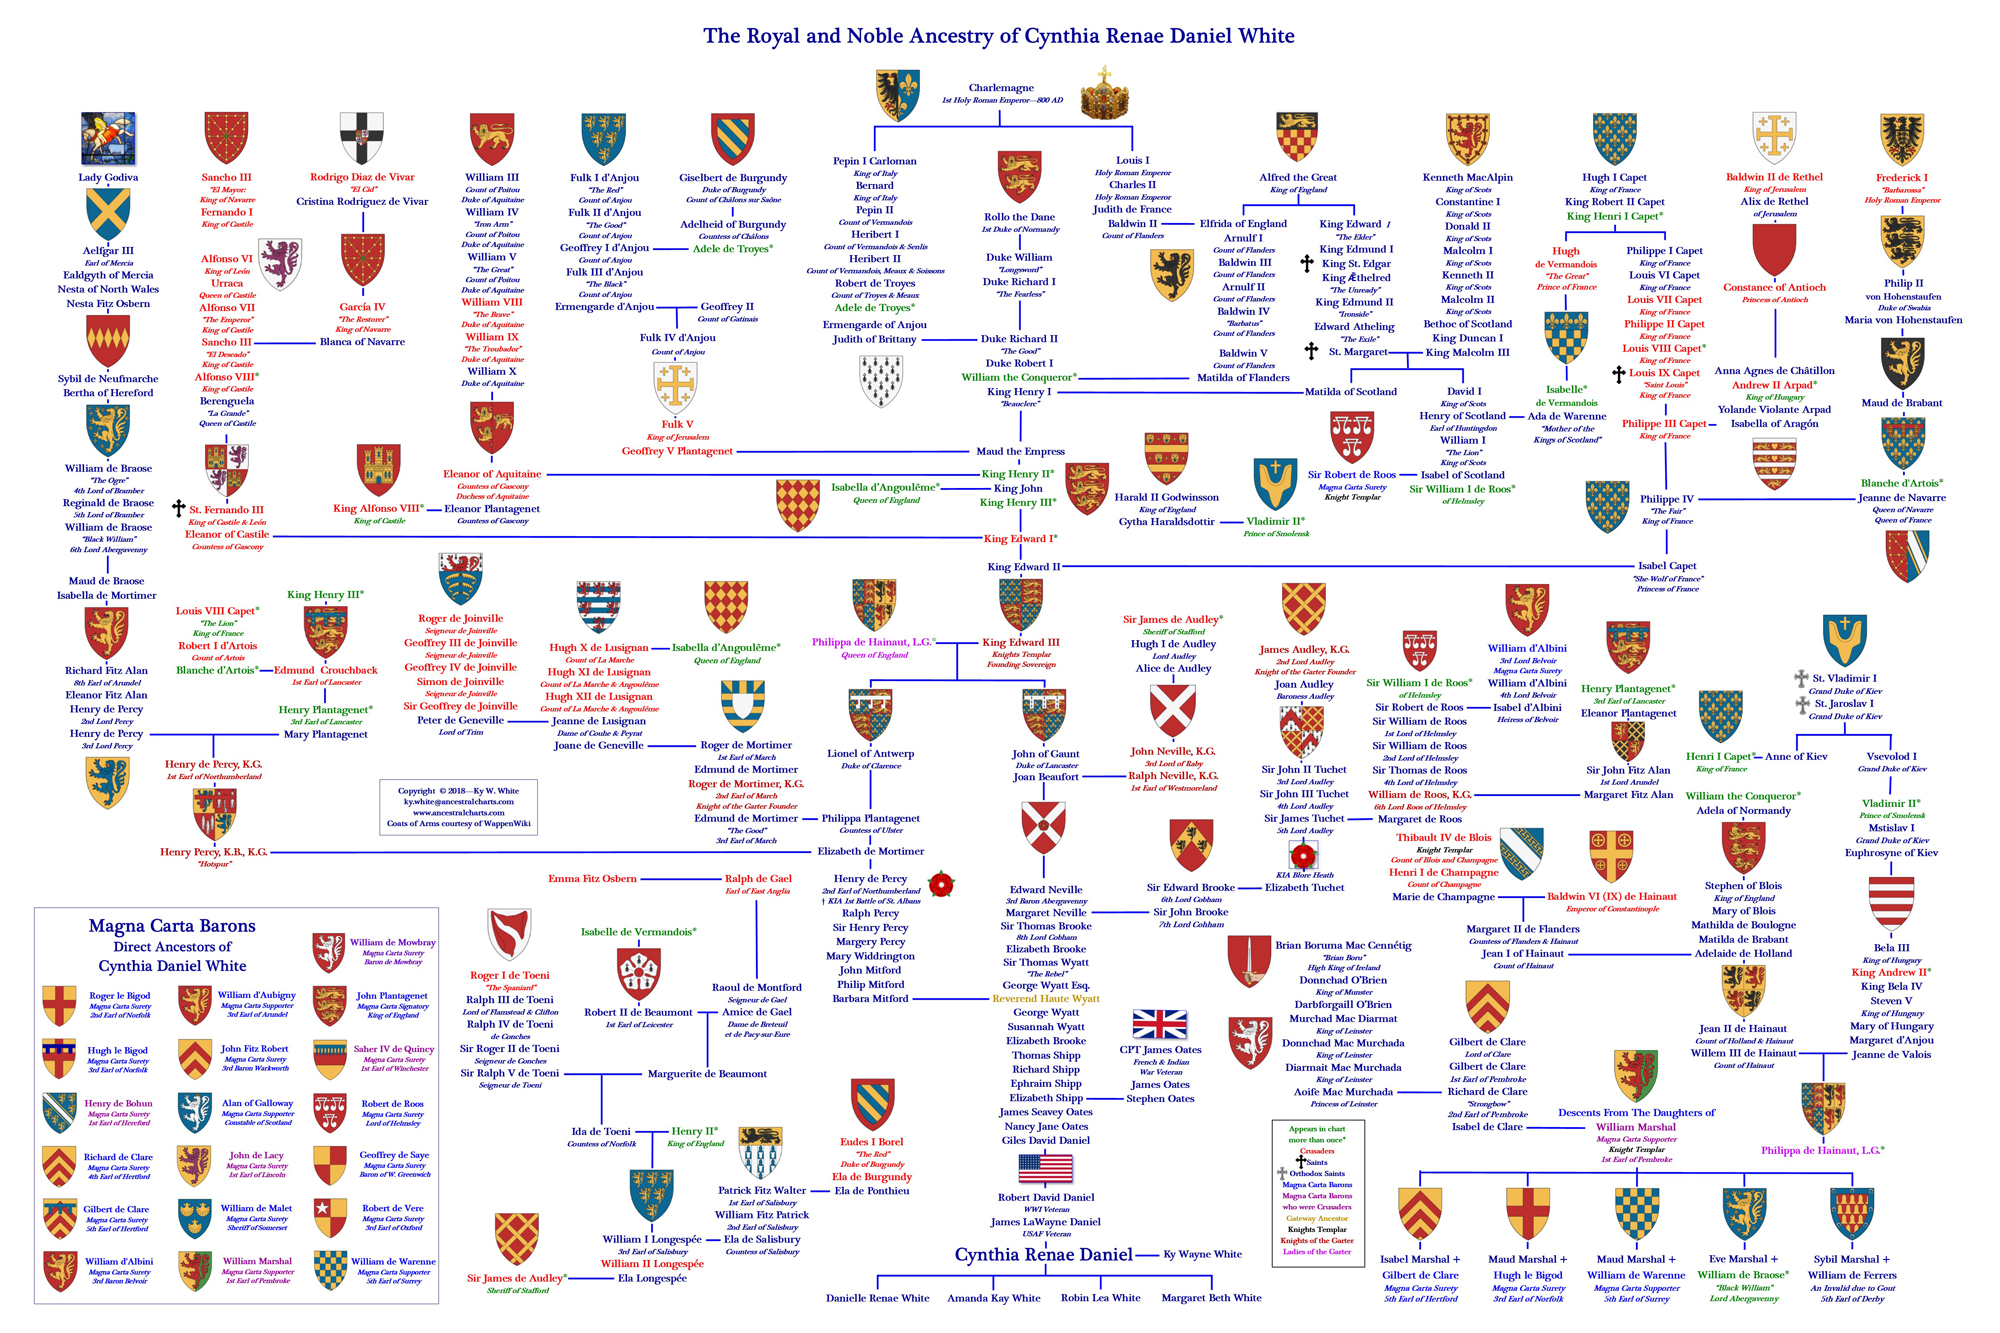 Ancestry Chart